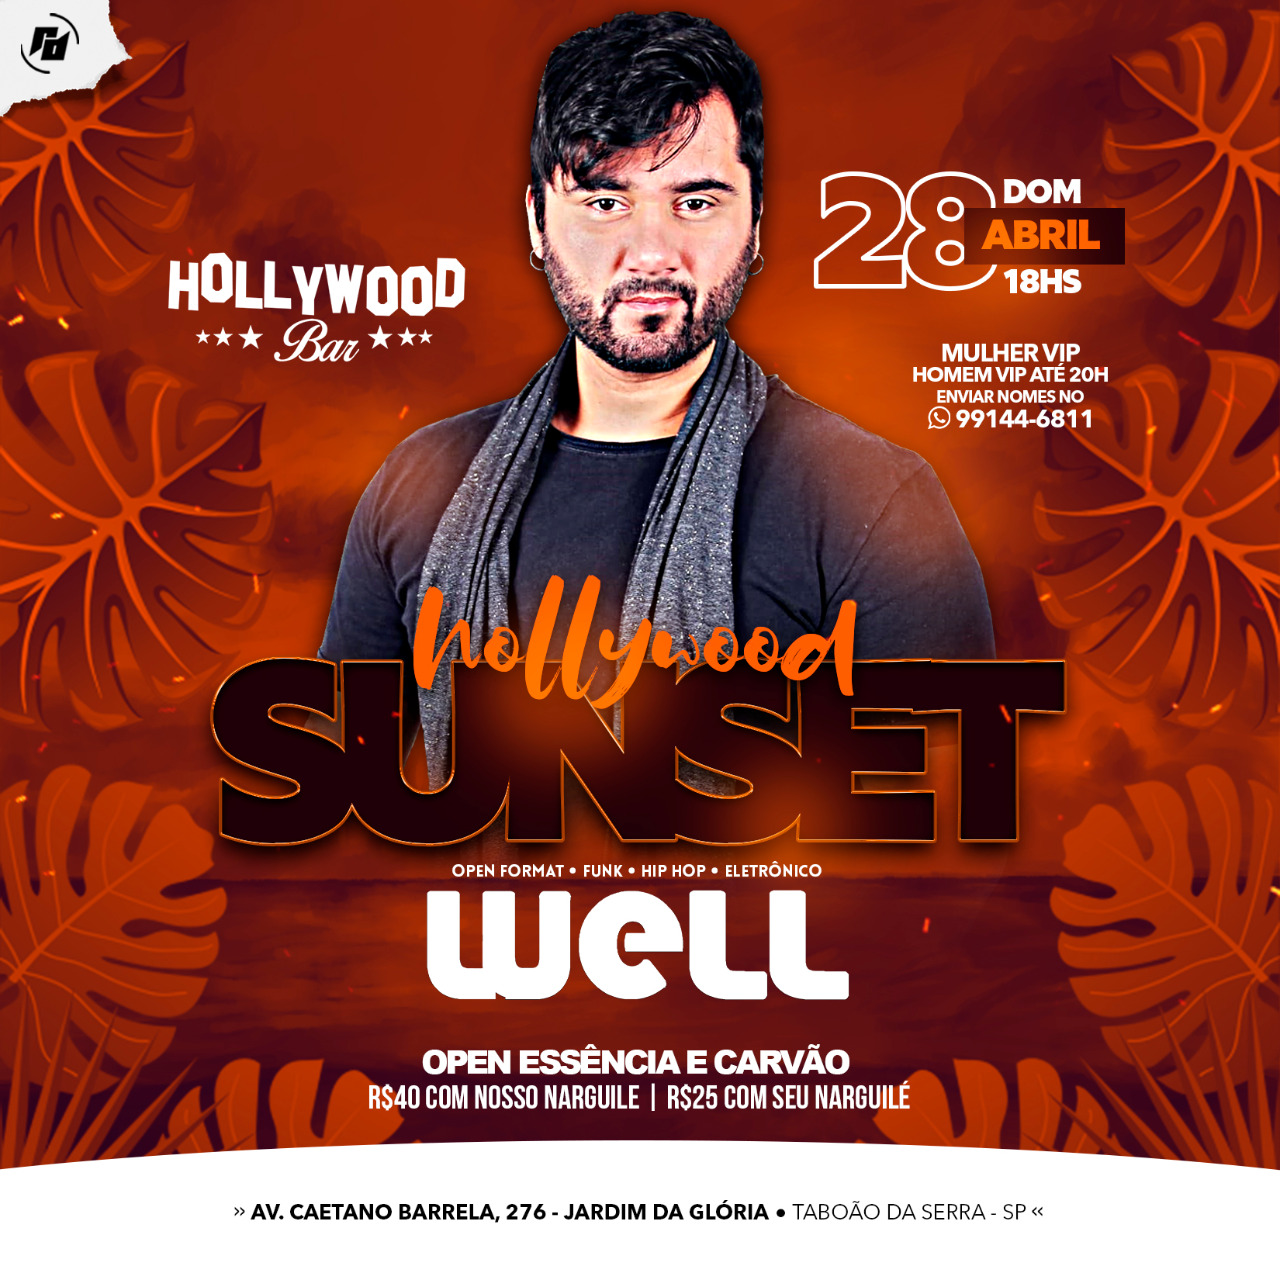 Hollywood Bar: Domingo 28/04 | Sunset - DJ WELL | Hollywood Bar